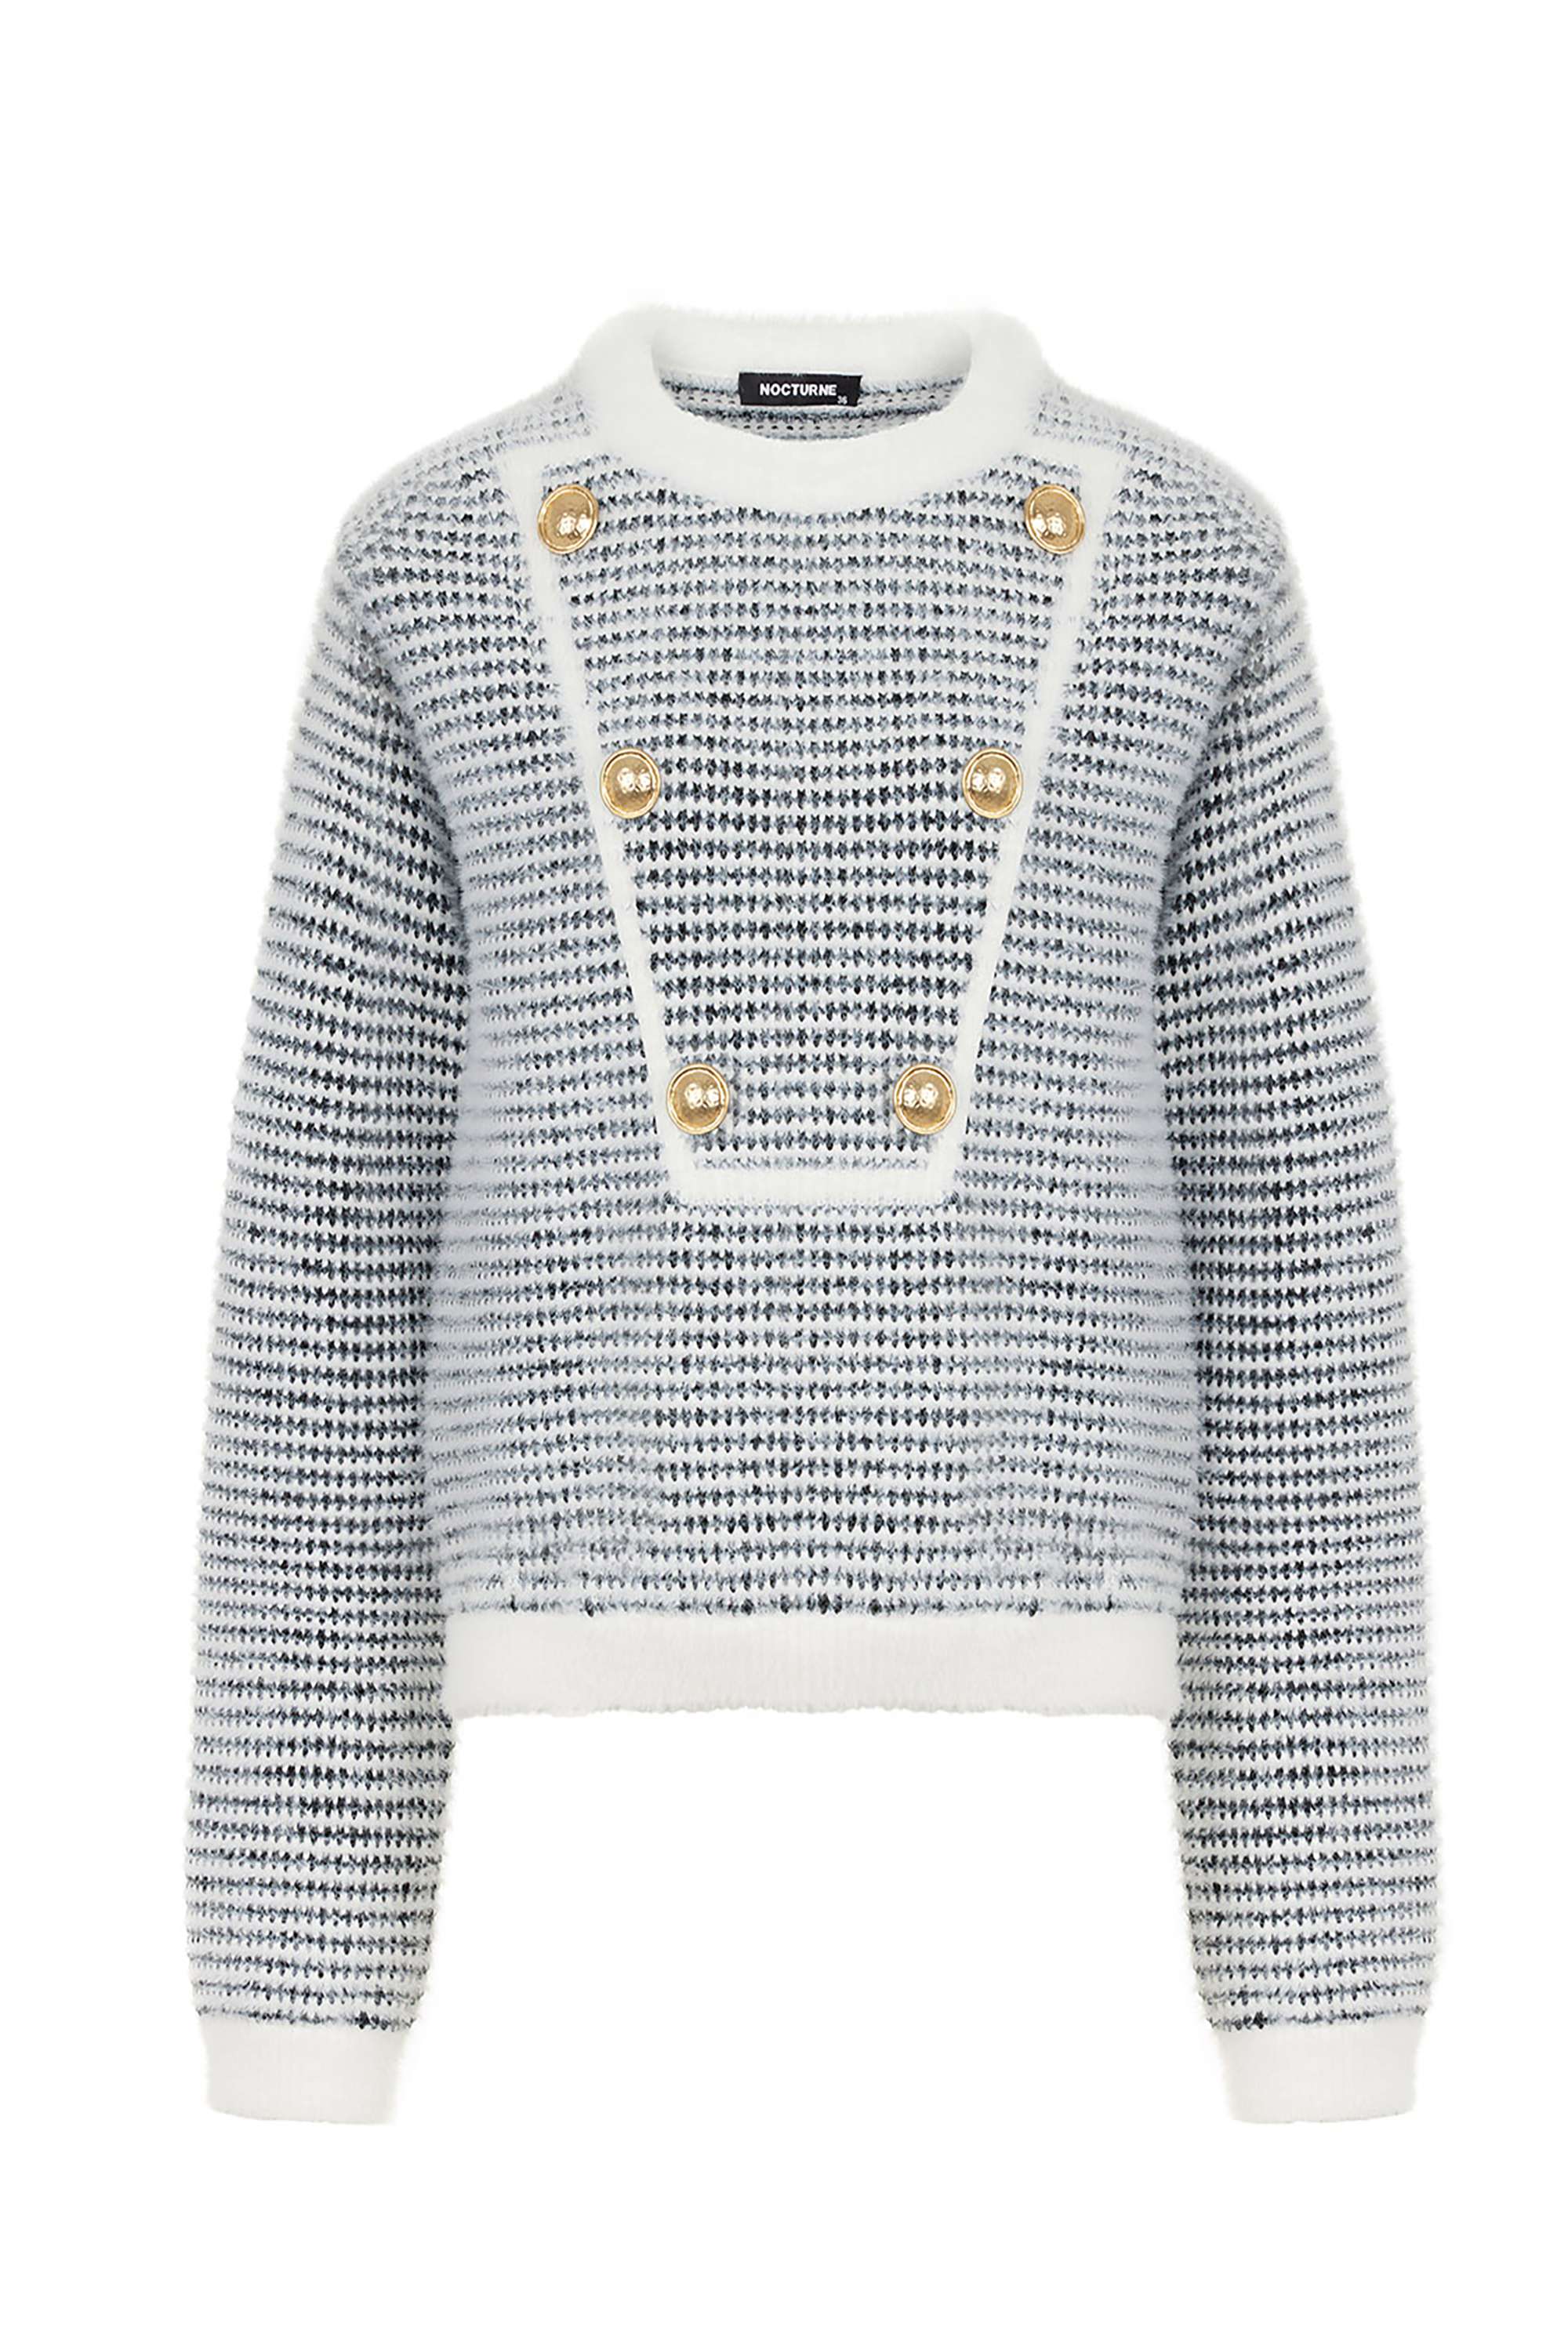 Multi Button Sweater